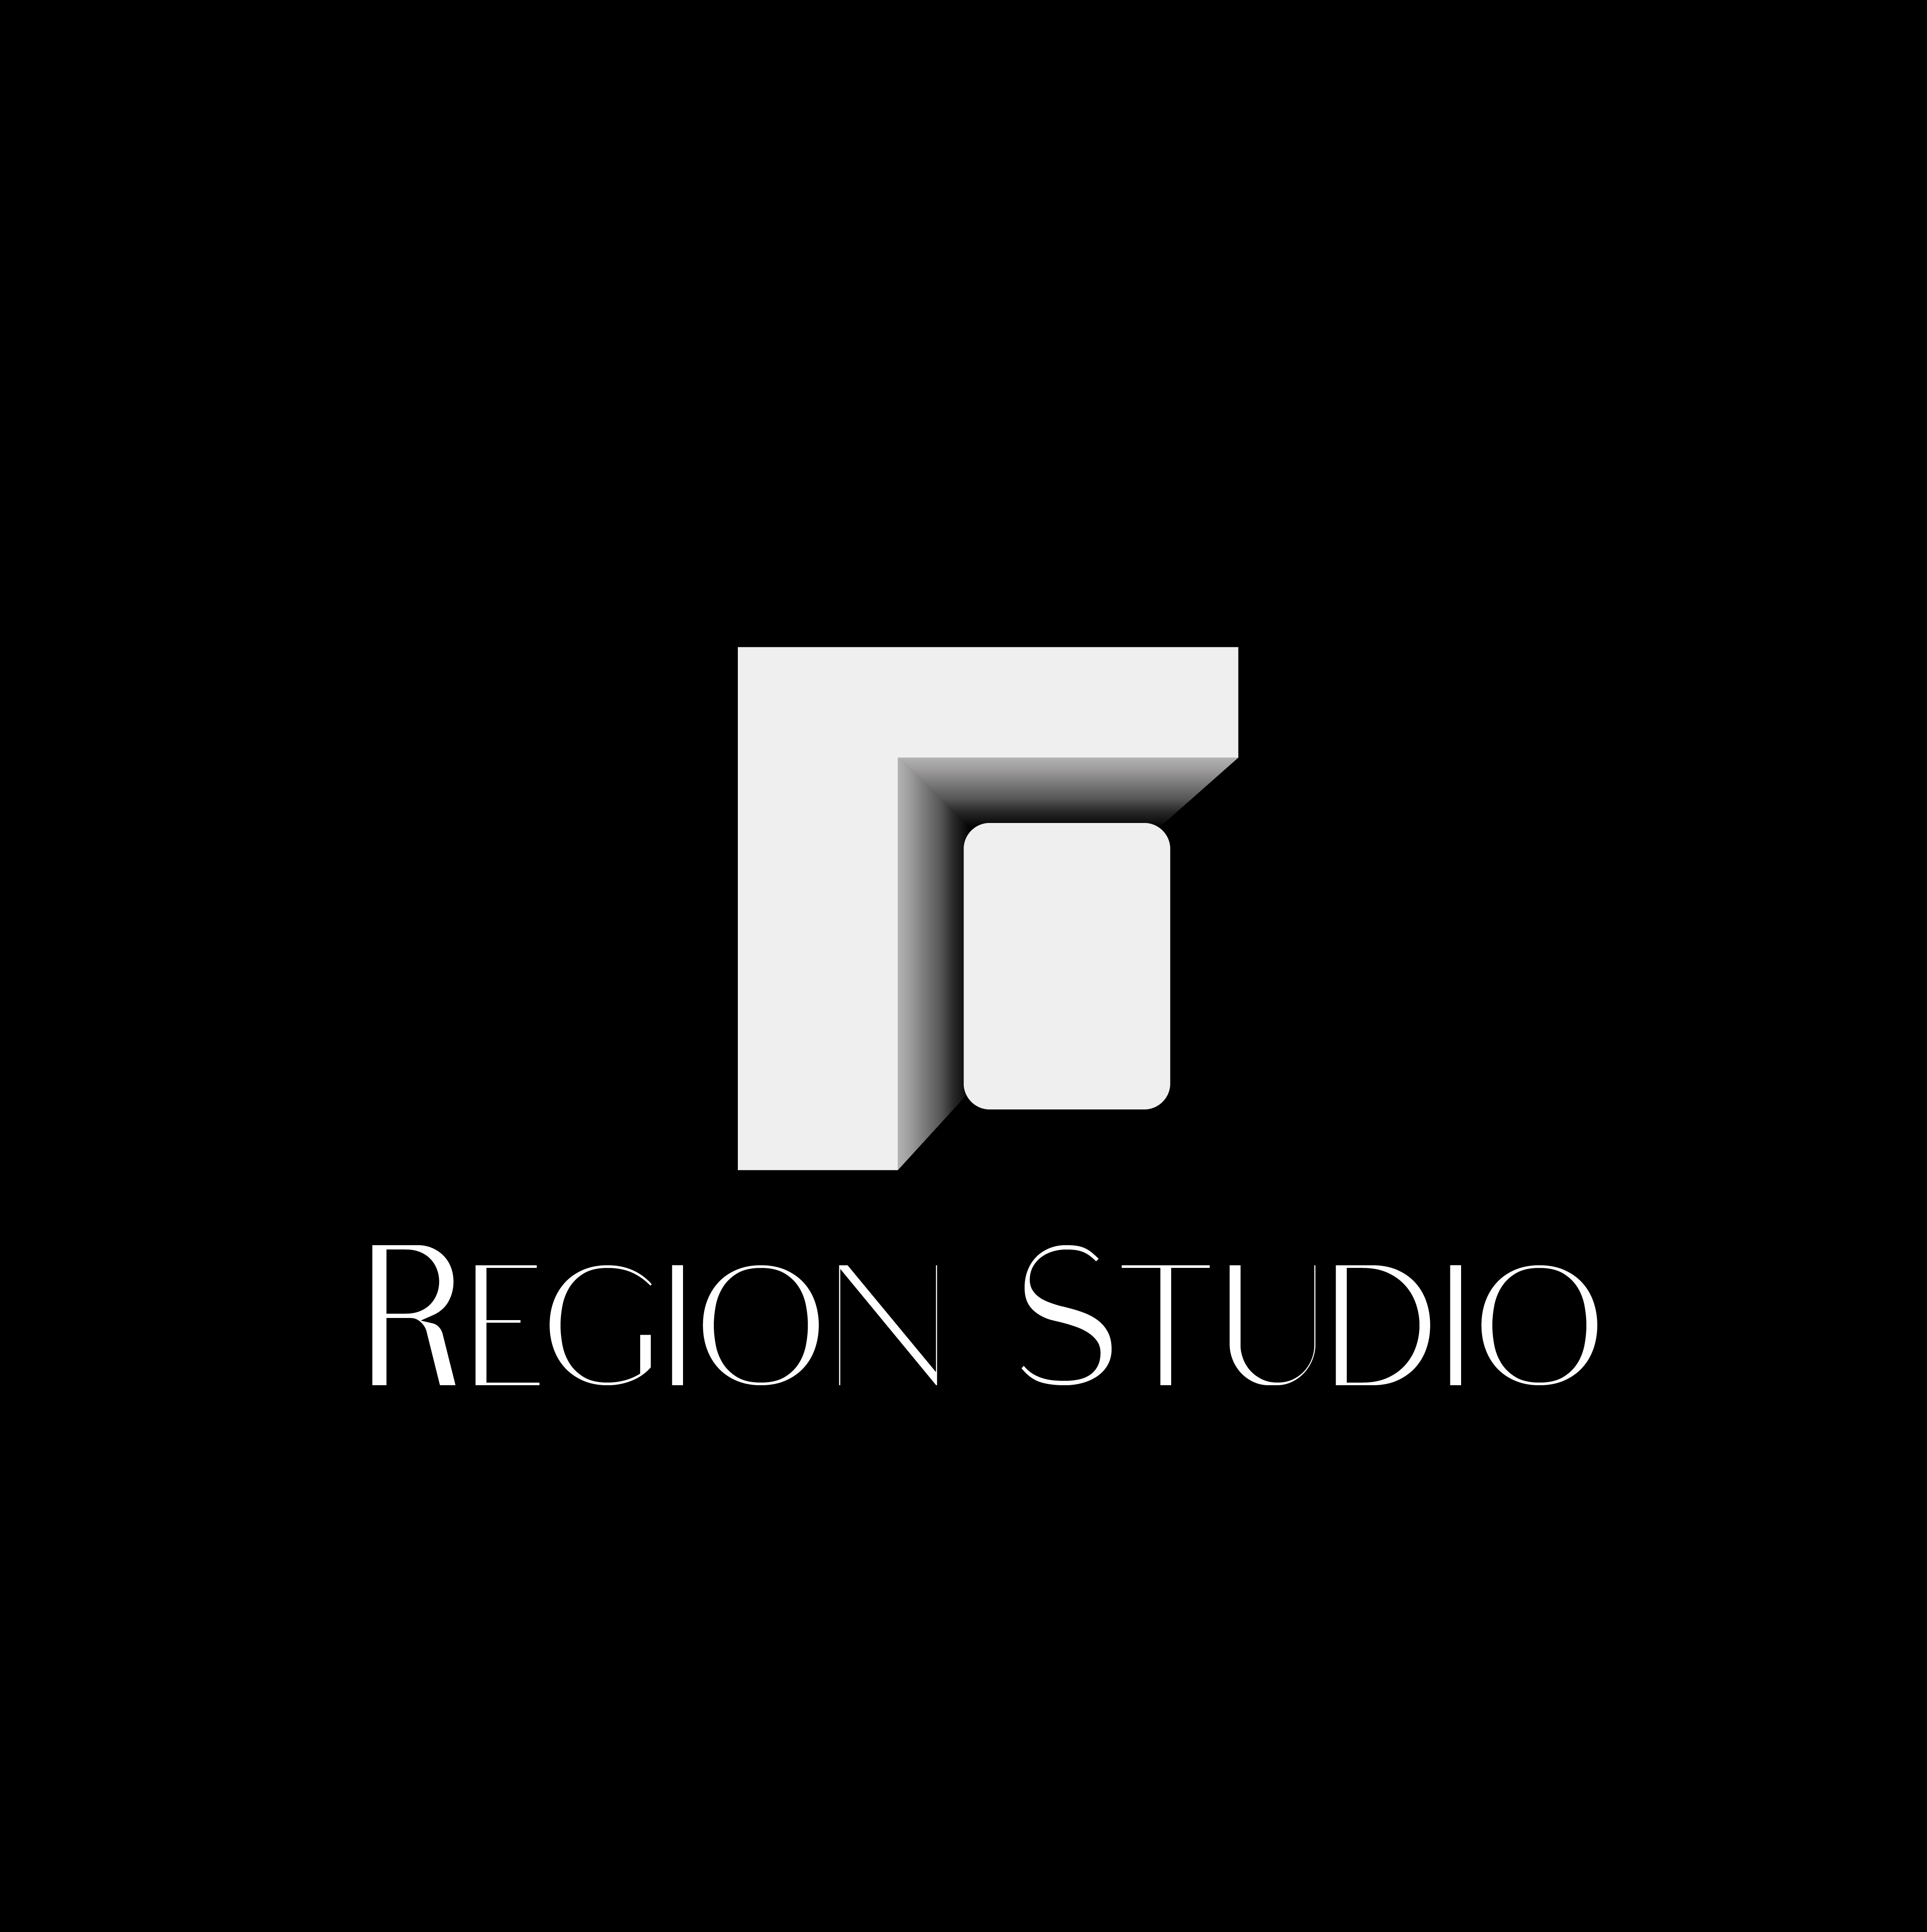 Region Studio